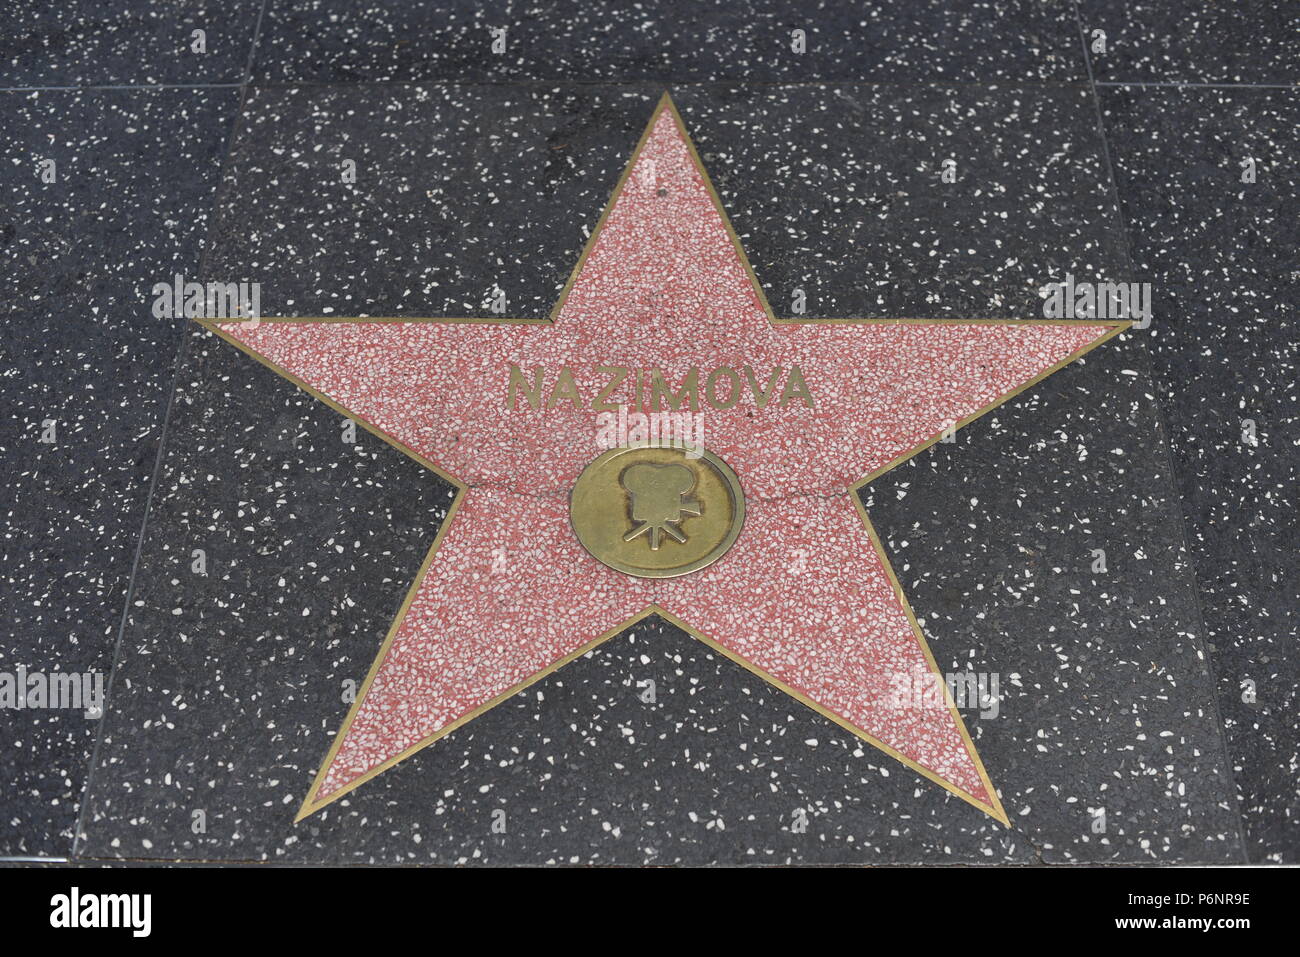 HOLLYWOOD, CA - 29. Juni: nazimova Stern auf dem Hollywood Walk of Fame in Hollywood, Kalifornien am 29. Juni 2018. Stockfoto